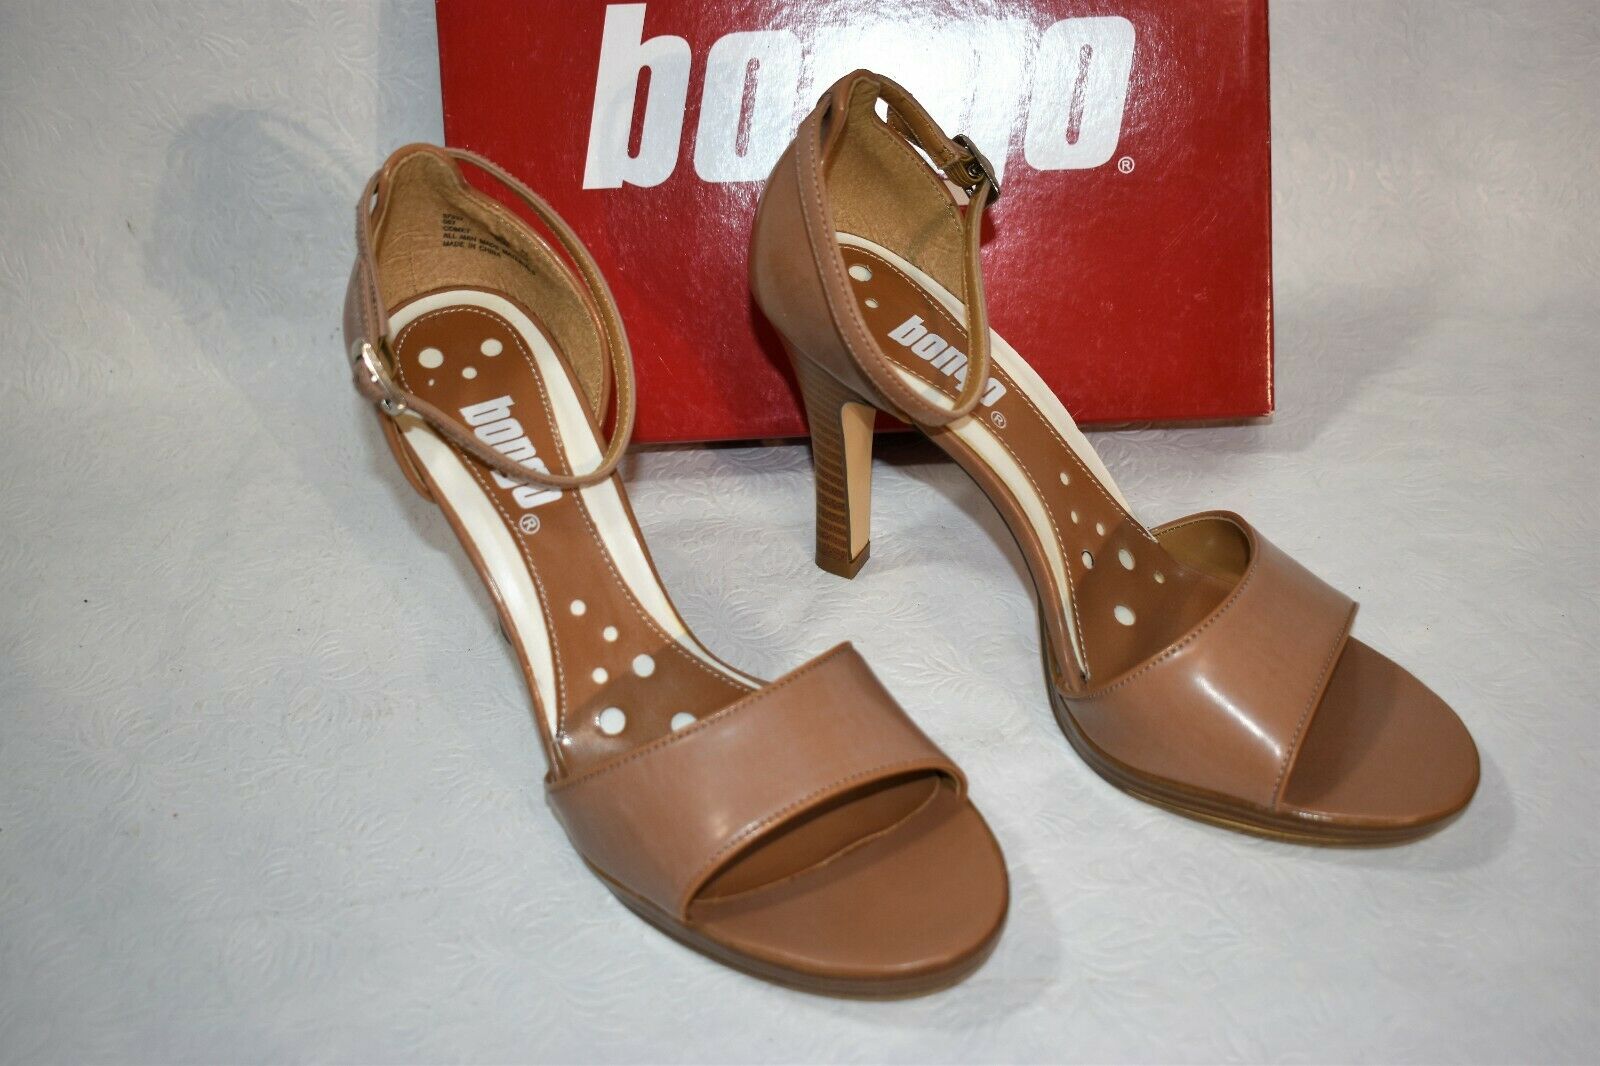 Bongo Shoes High Heels Natural Size 8.5 Women's